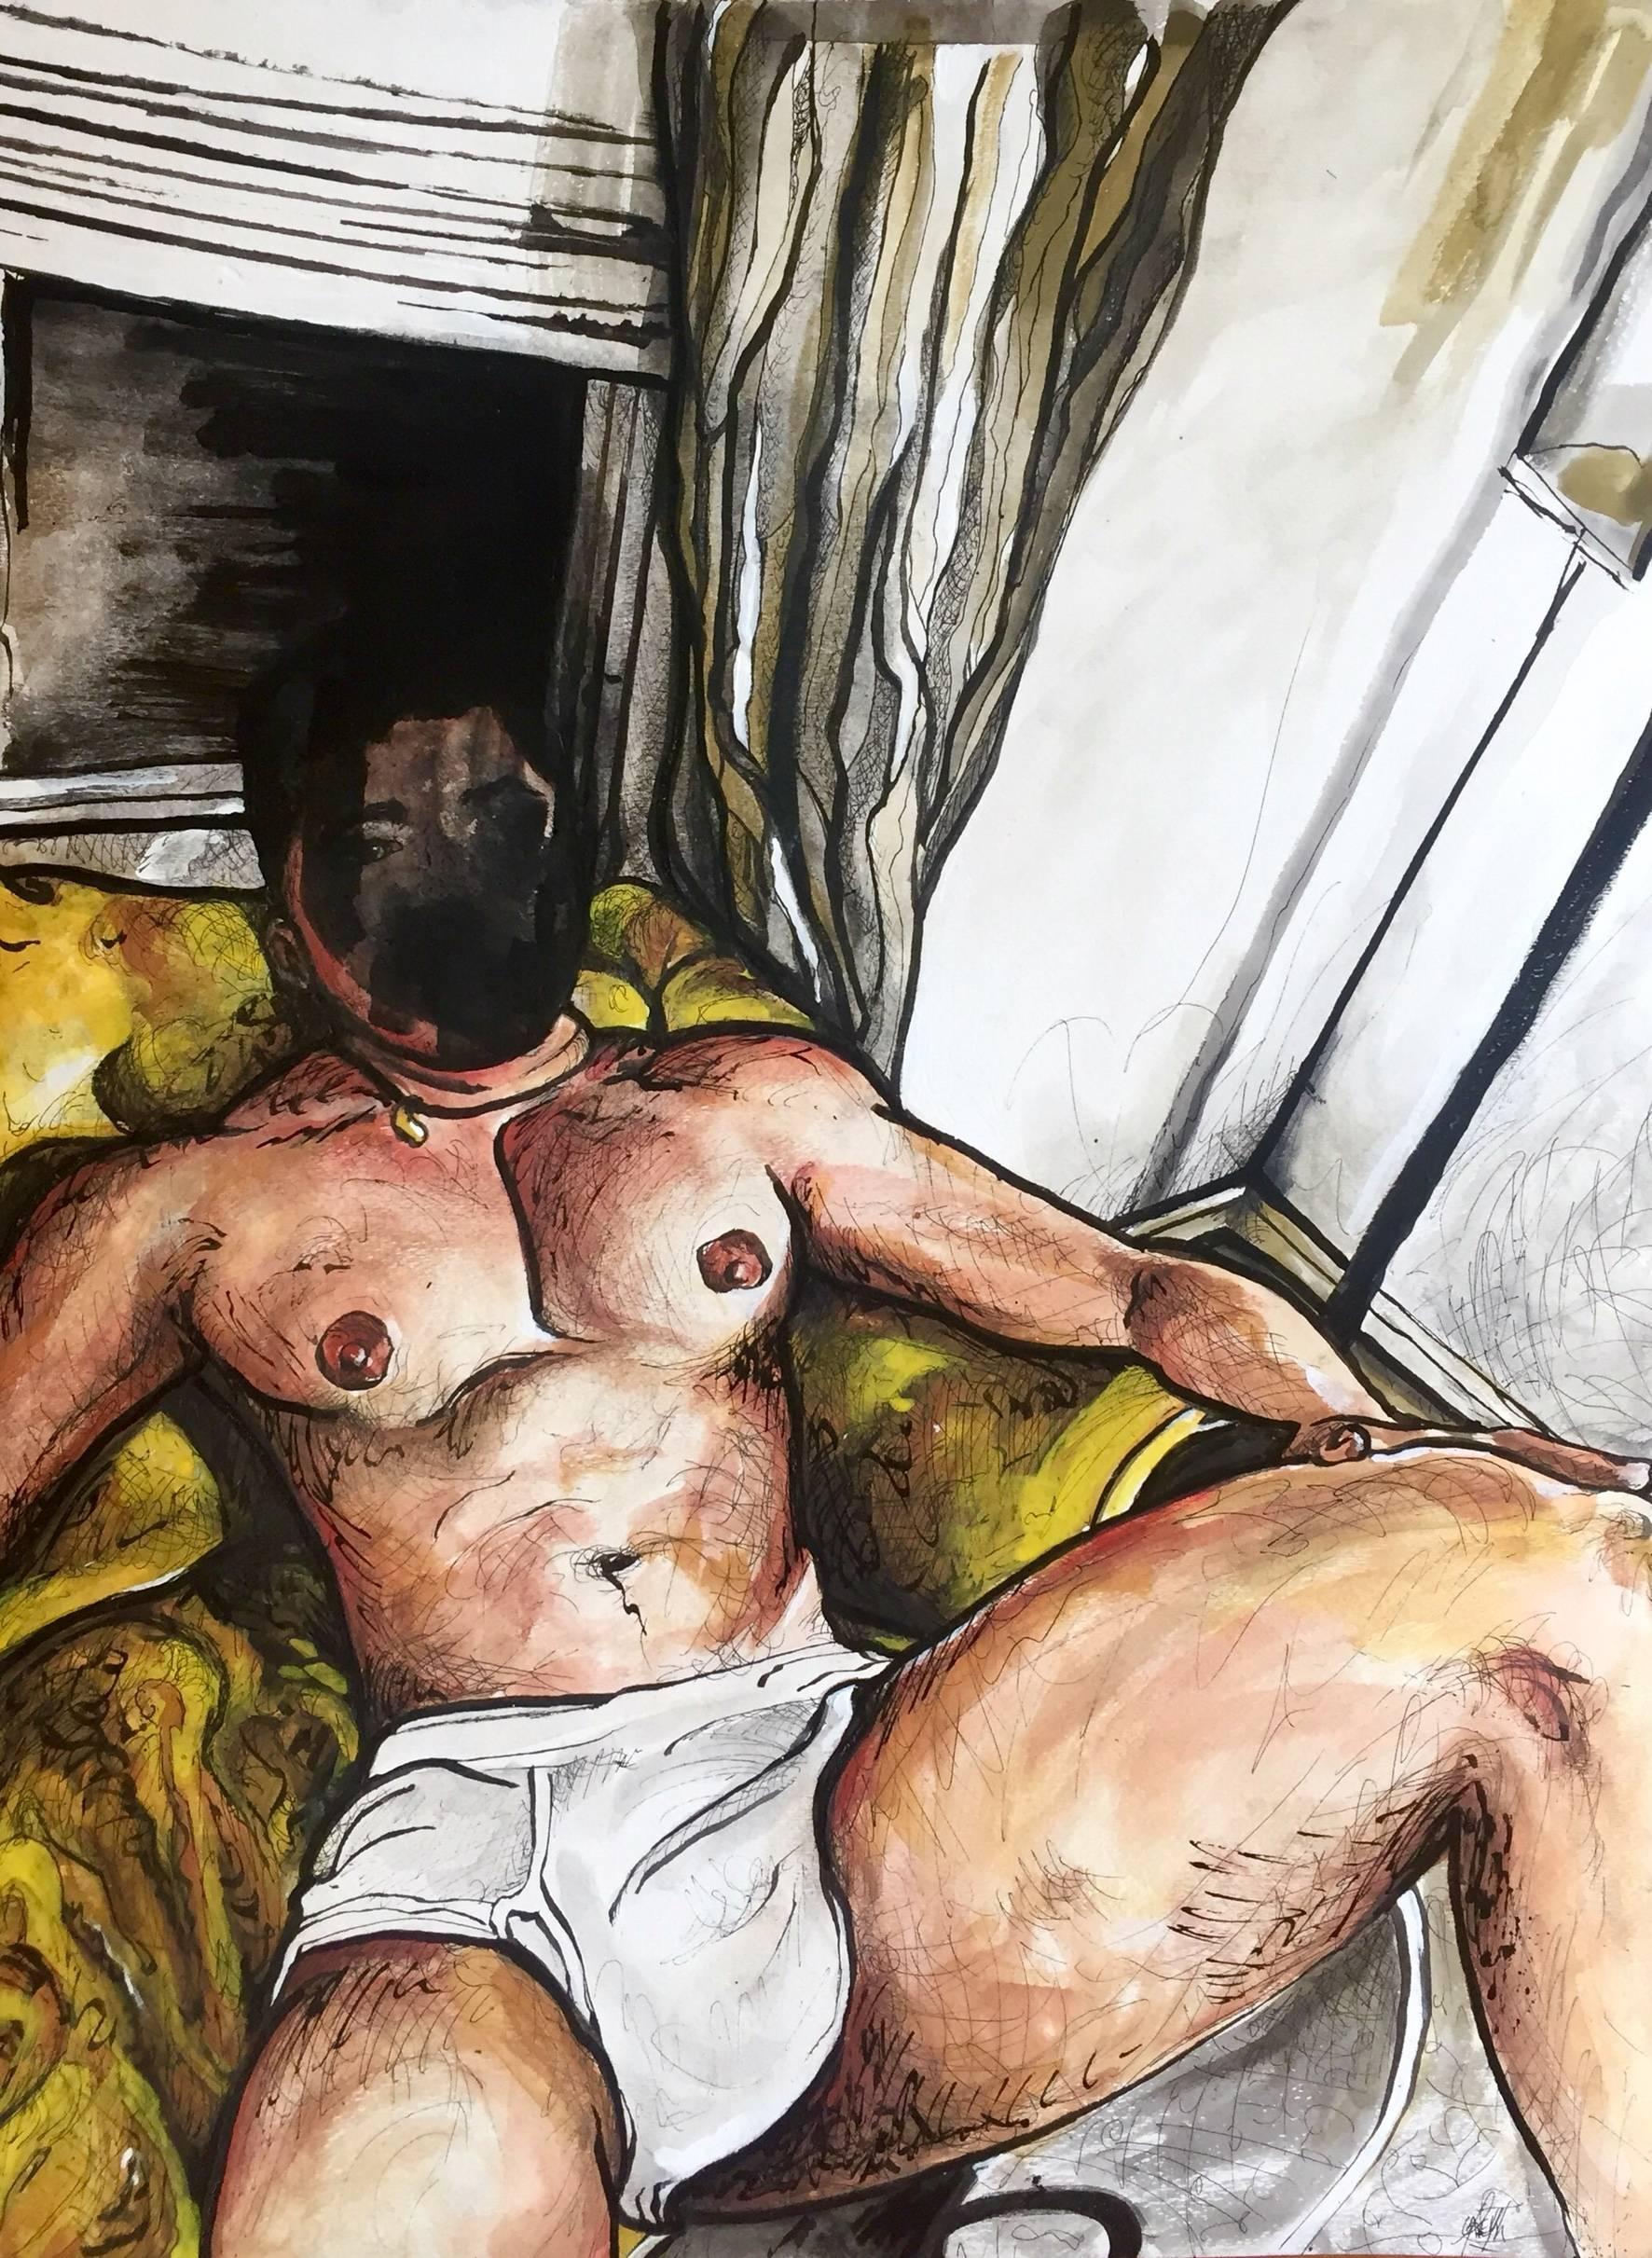 Garek Figurative Art - Sustenance, Stealer of Cells - Nude Male Pin-up Watercolor Painting